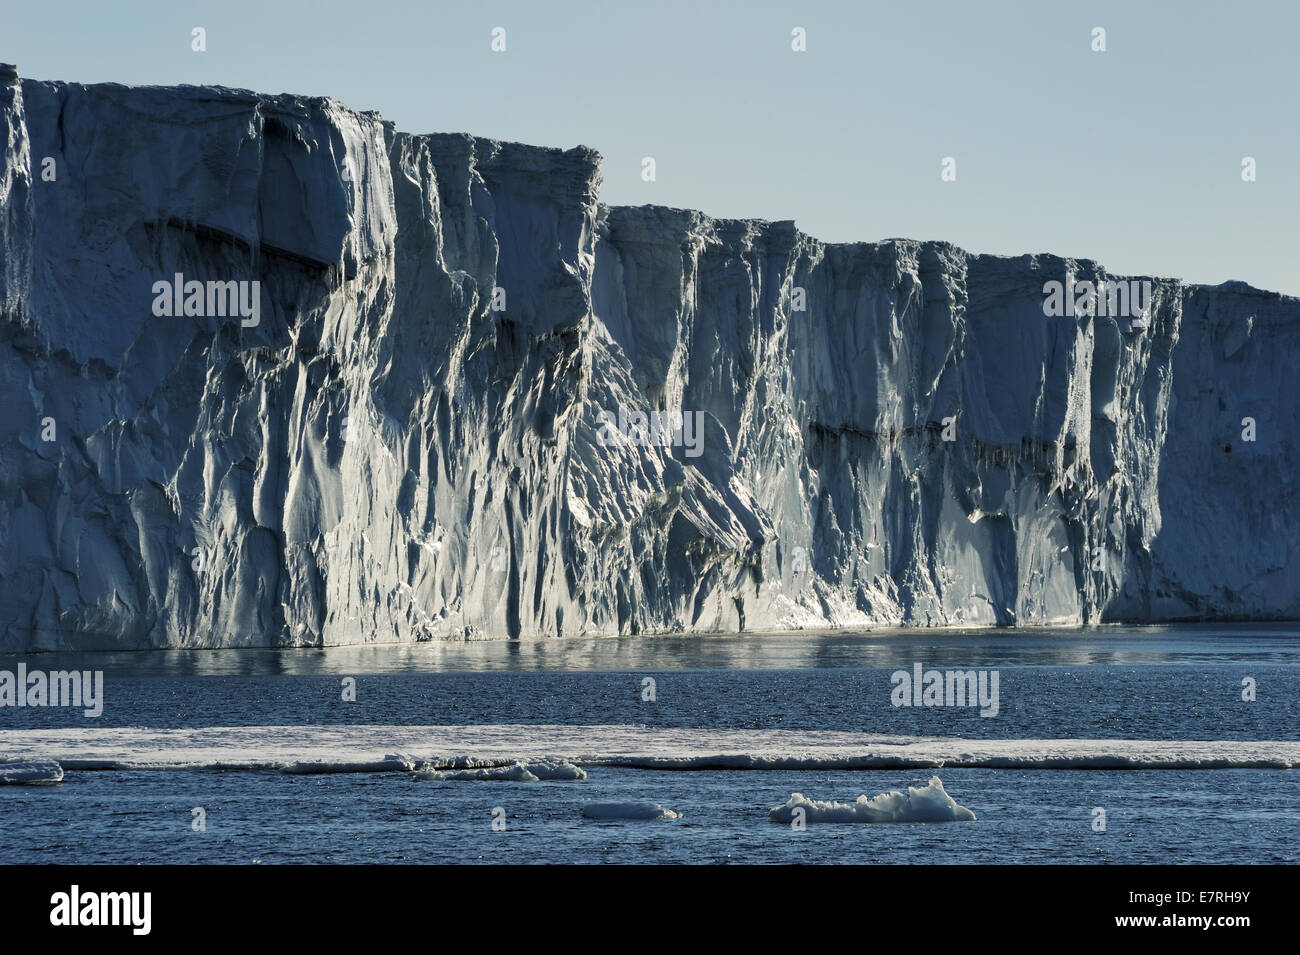 Edge of an ice shelf in the Ross sea, Antarctica Stock Photo